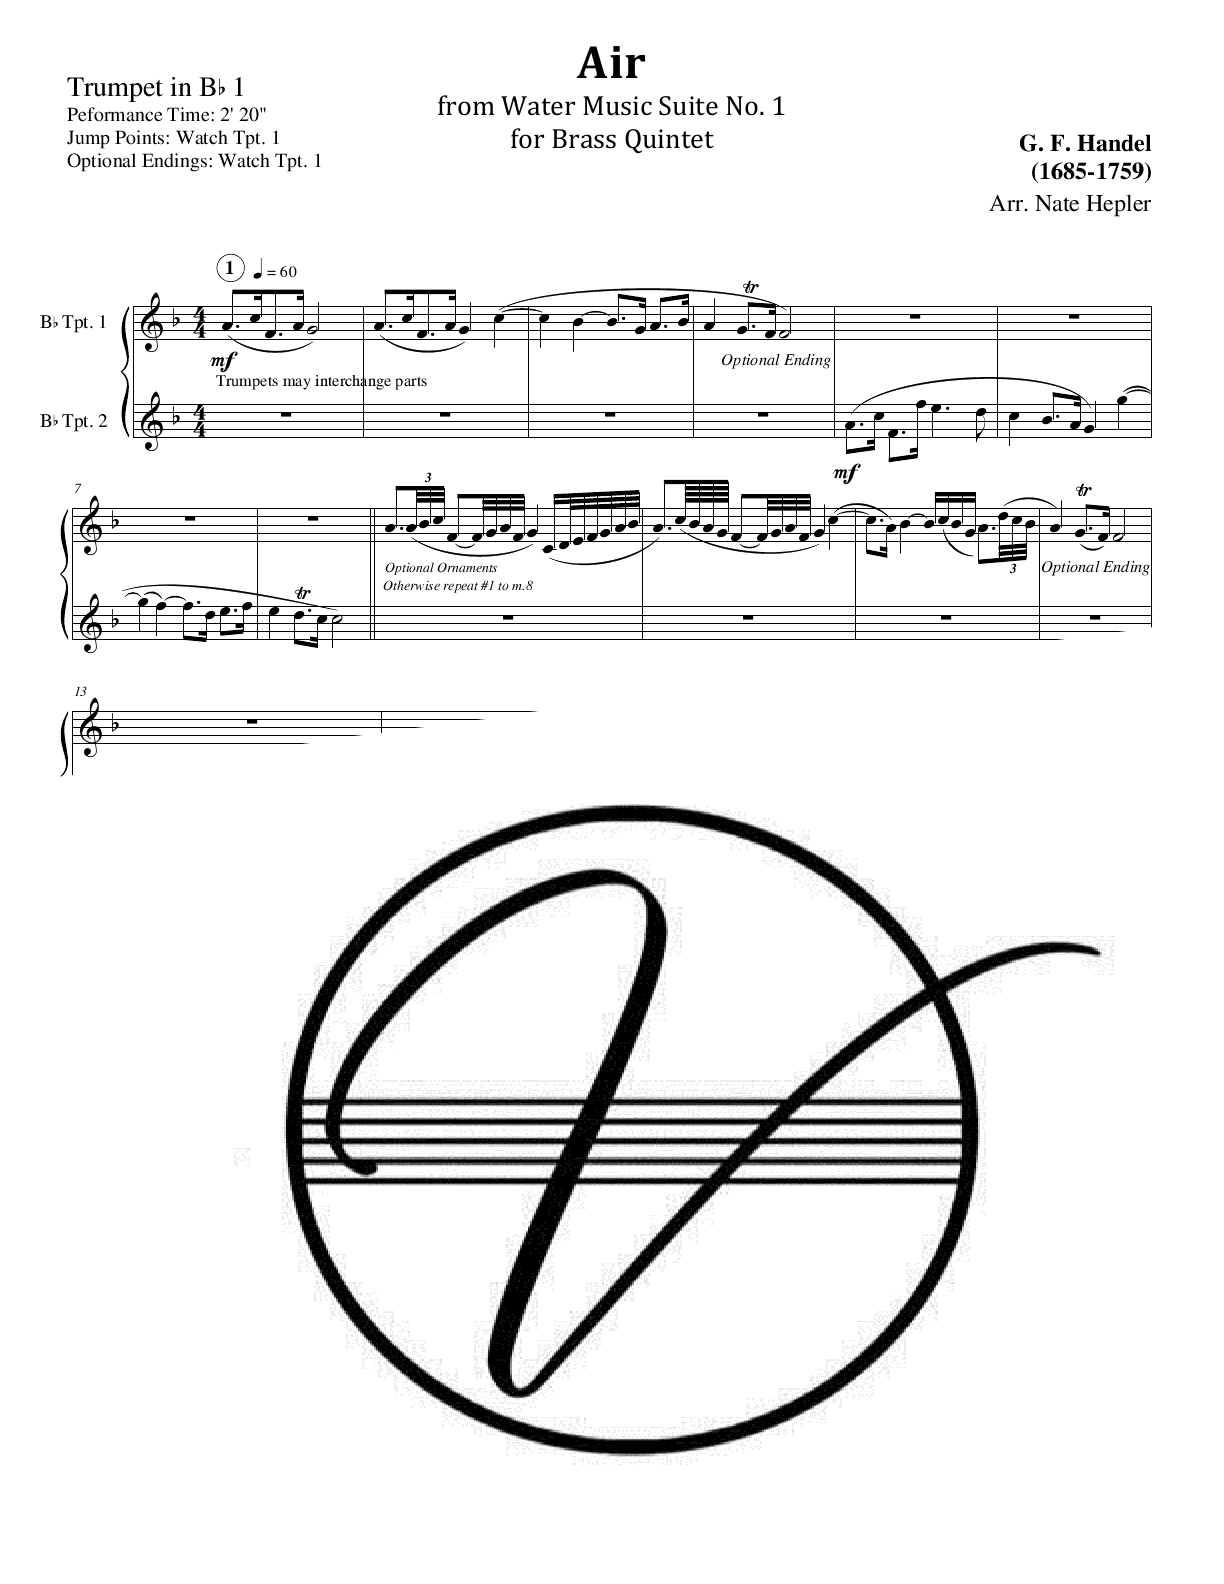 Handel - Air from Water Music Suite No. 1 (Brass Quintet)